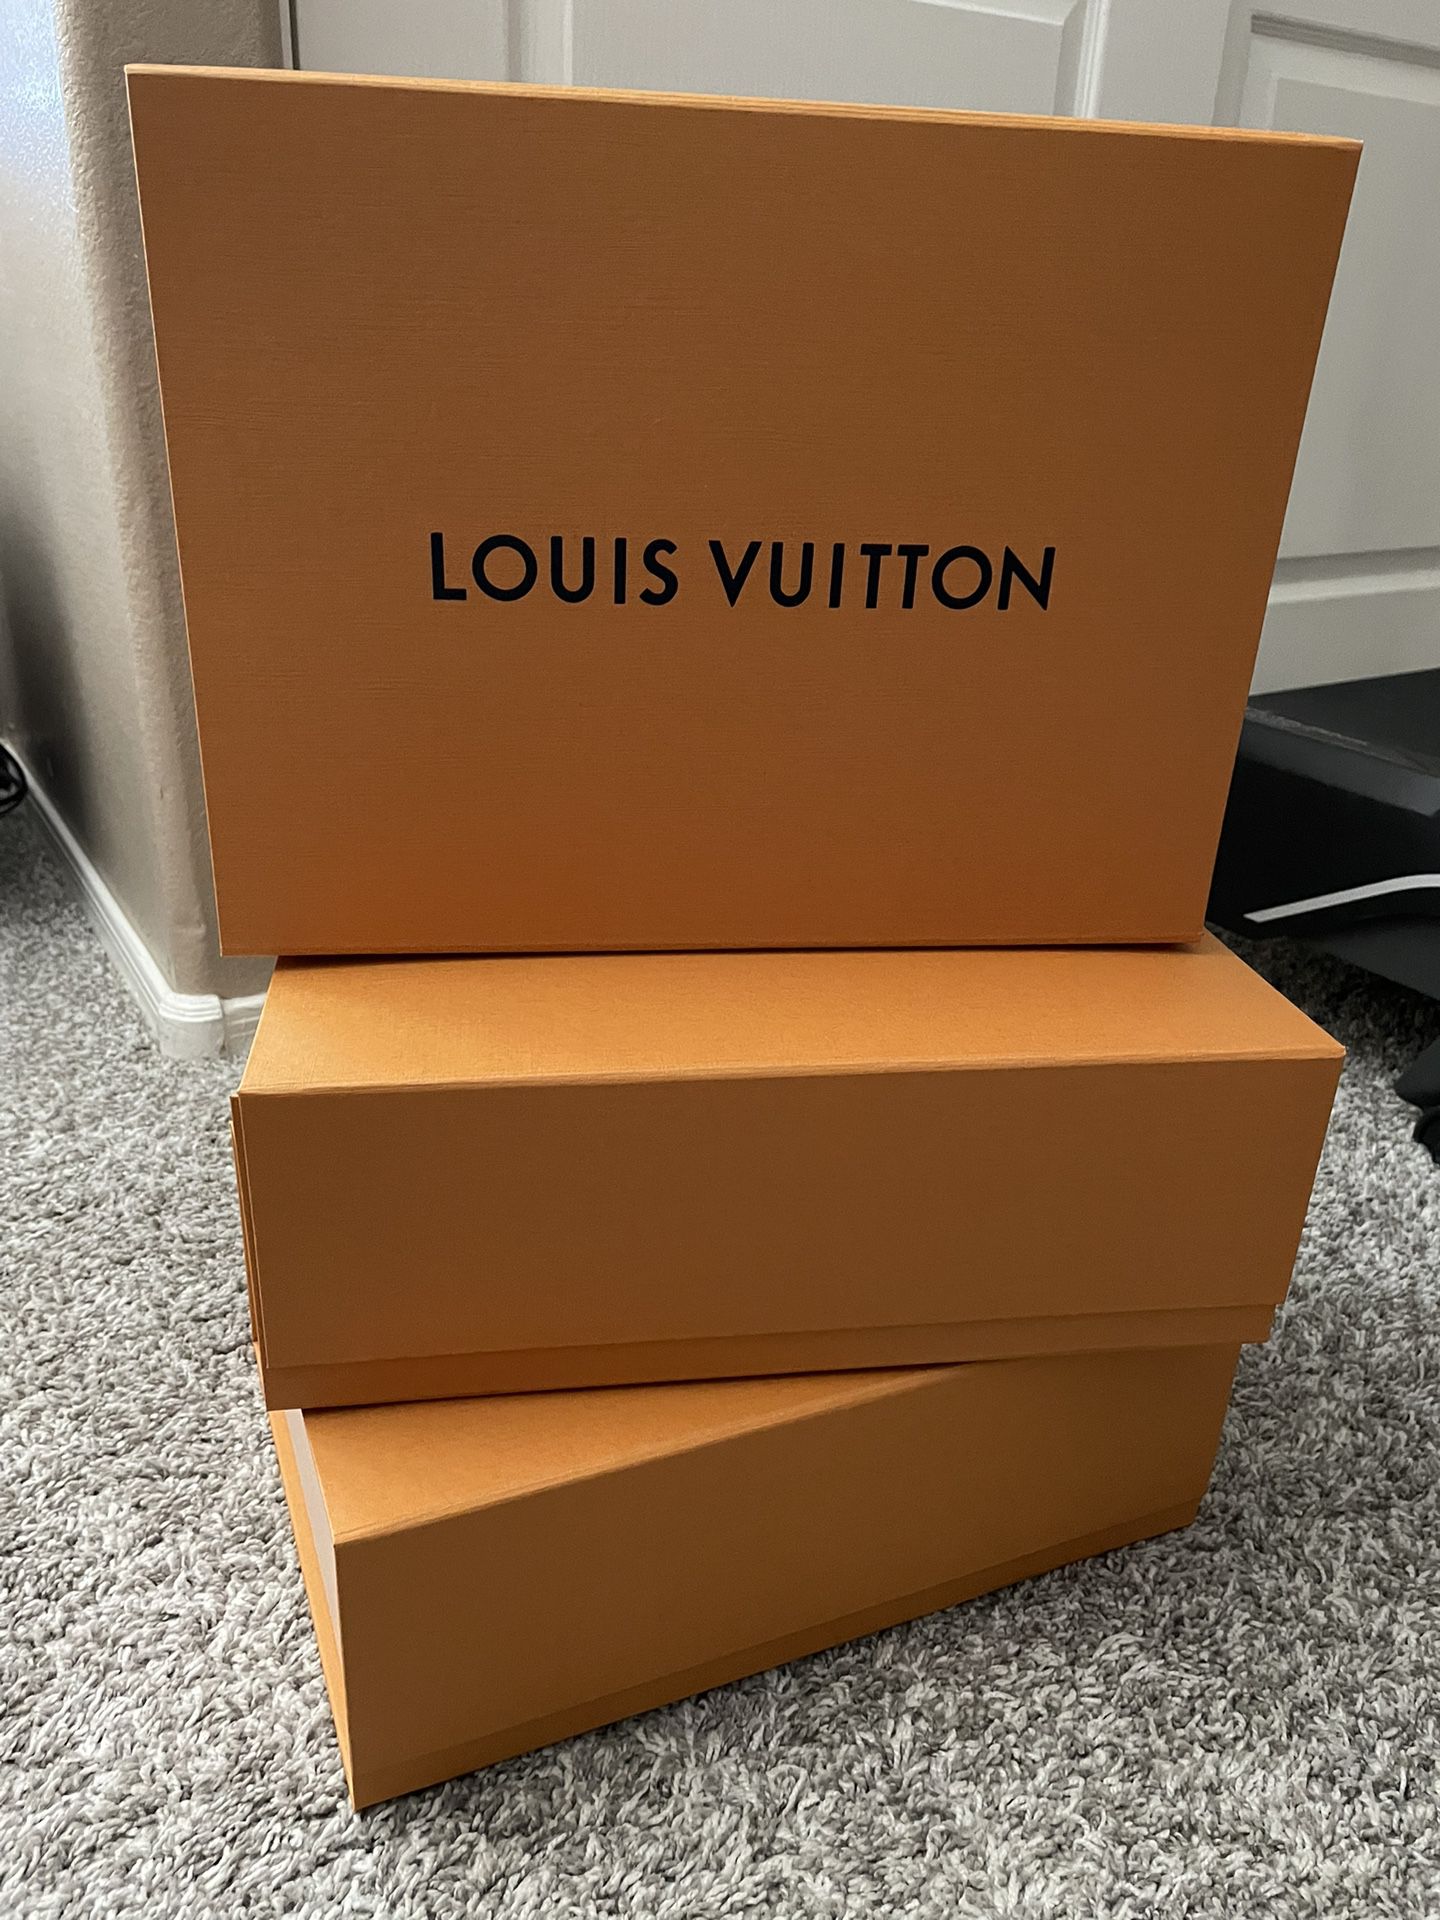 Authentic Louis Vuitton Bags for Sale in Glendale, AZ - OfferUp